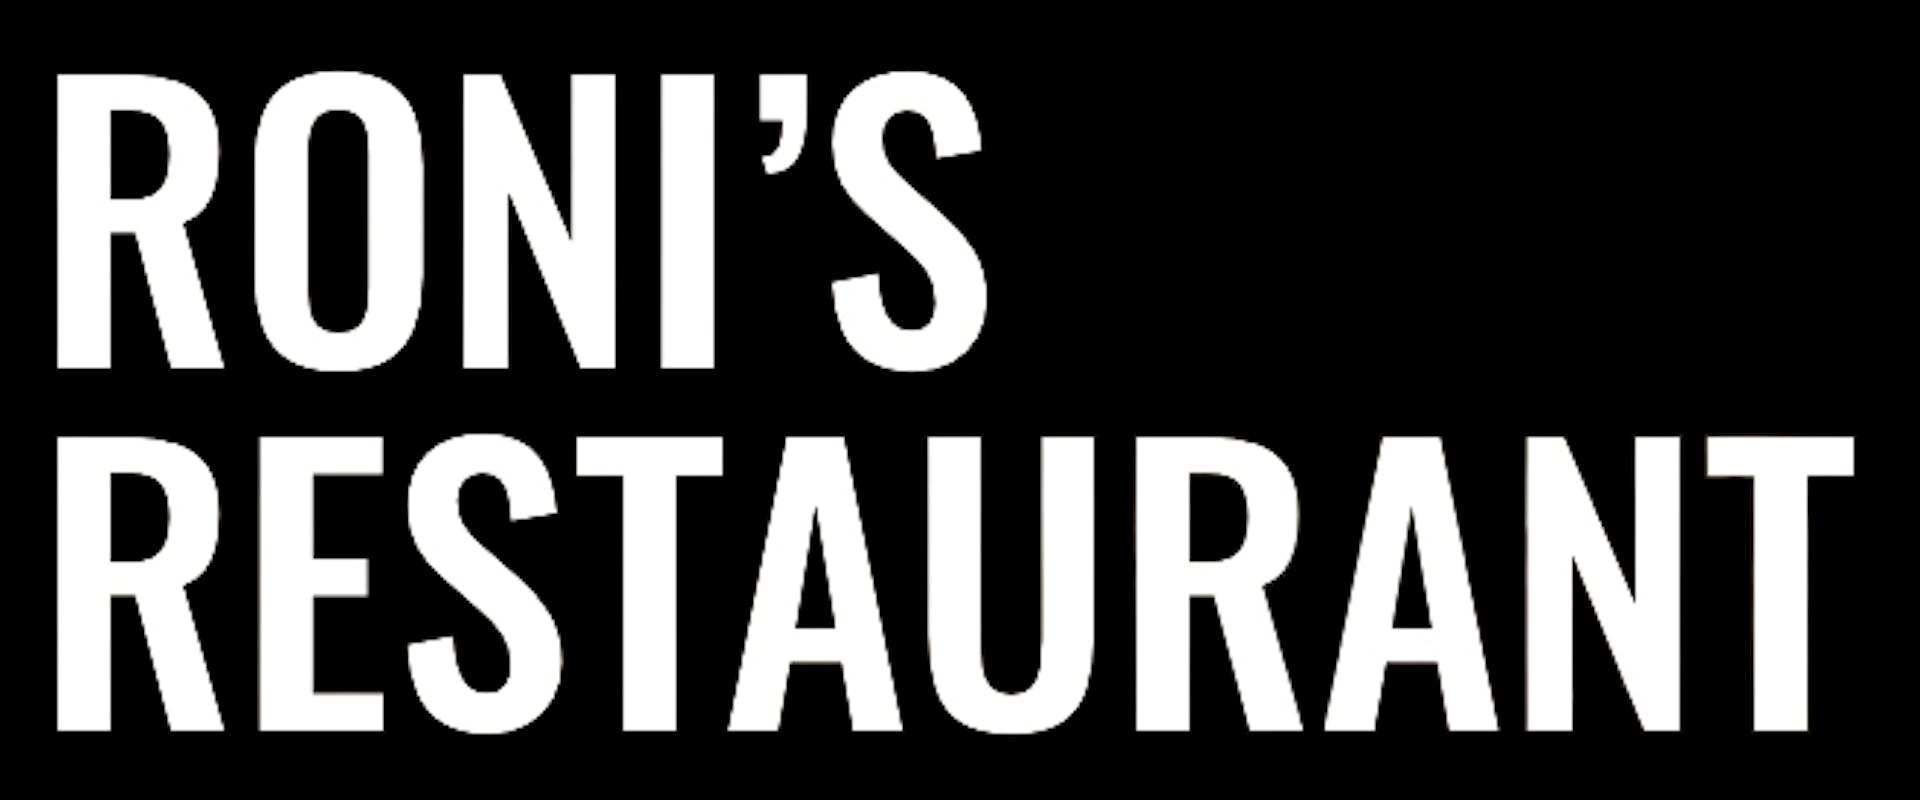 Ronis Restaurant